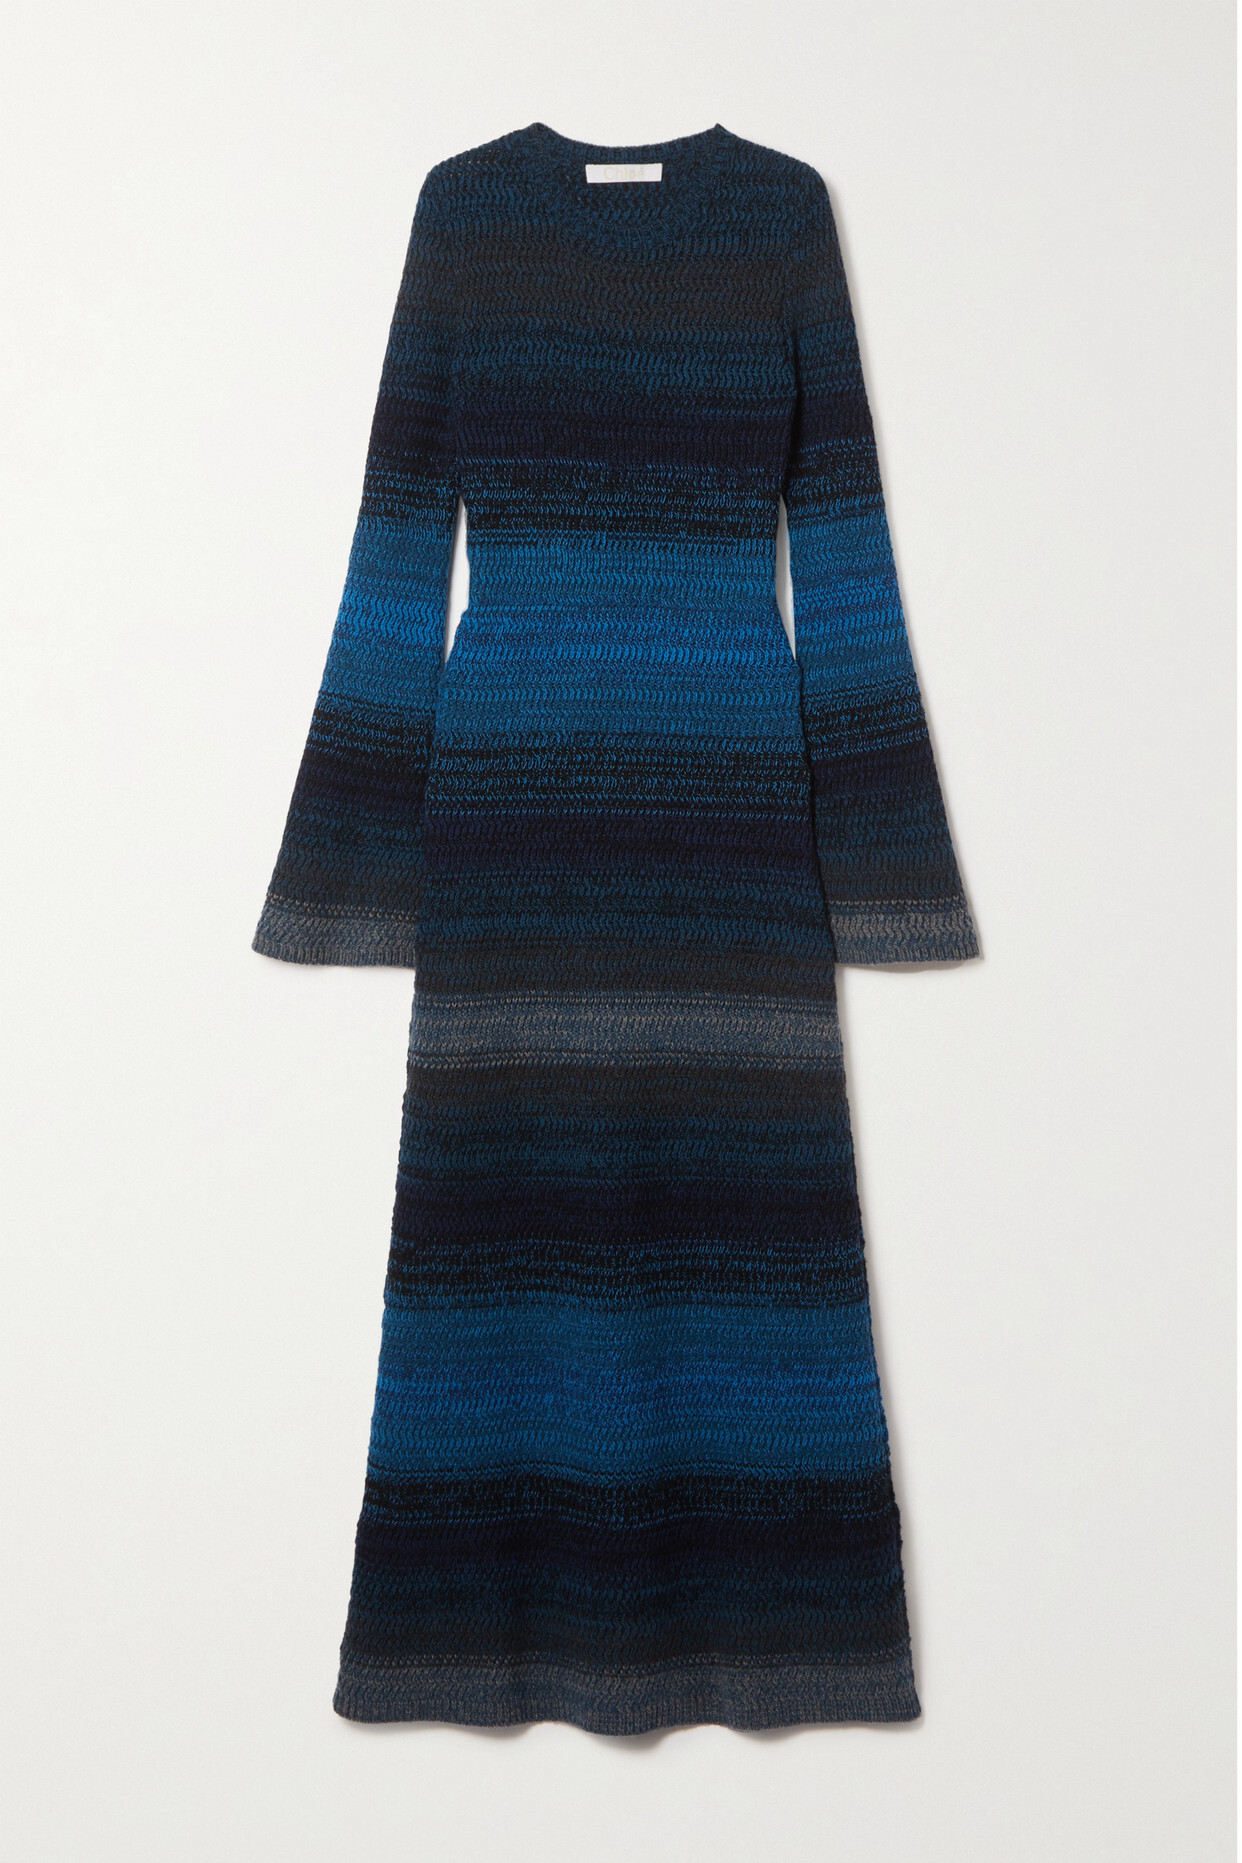 Chloé Chloé - Striped Ribbed Cashmere Maxi Dress - Blue